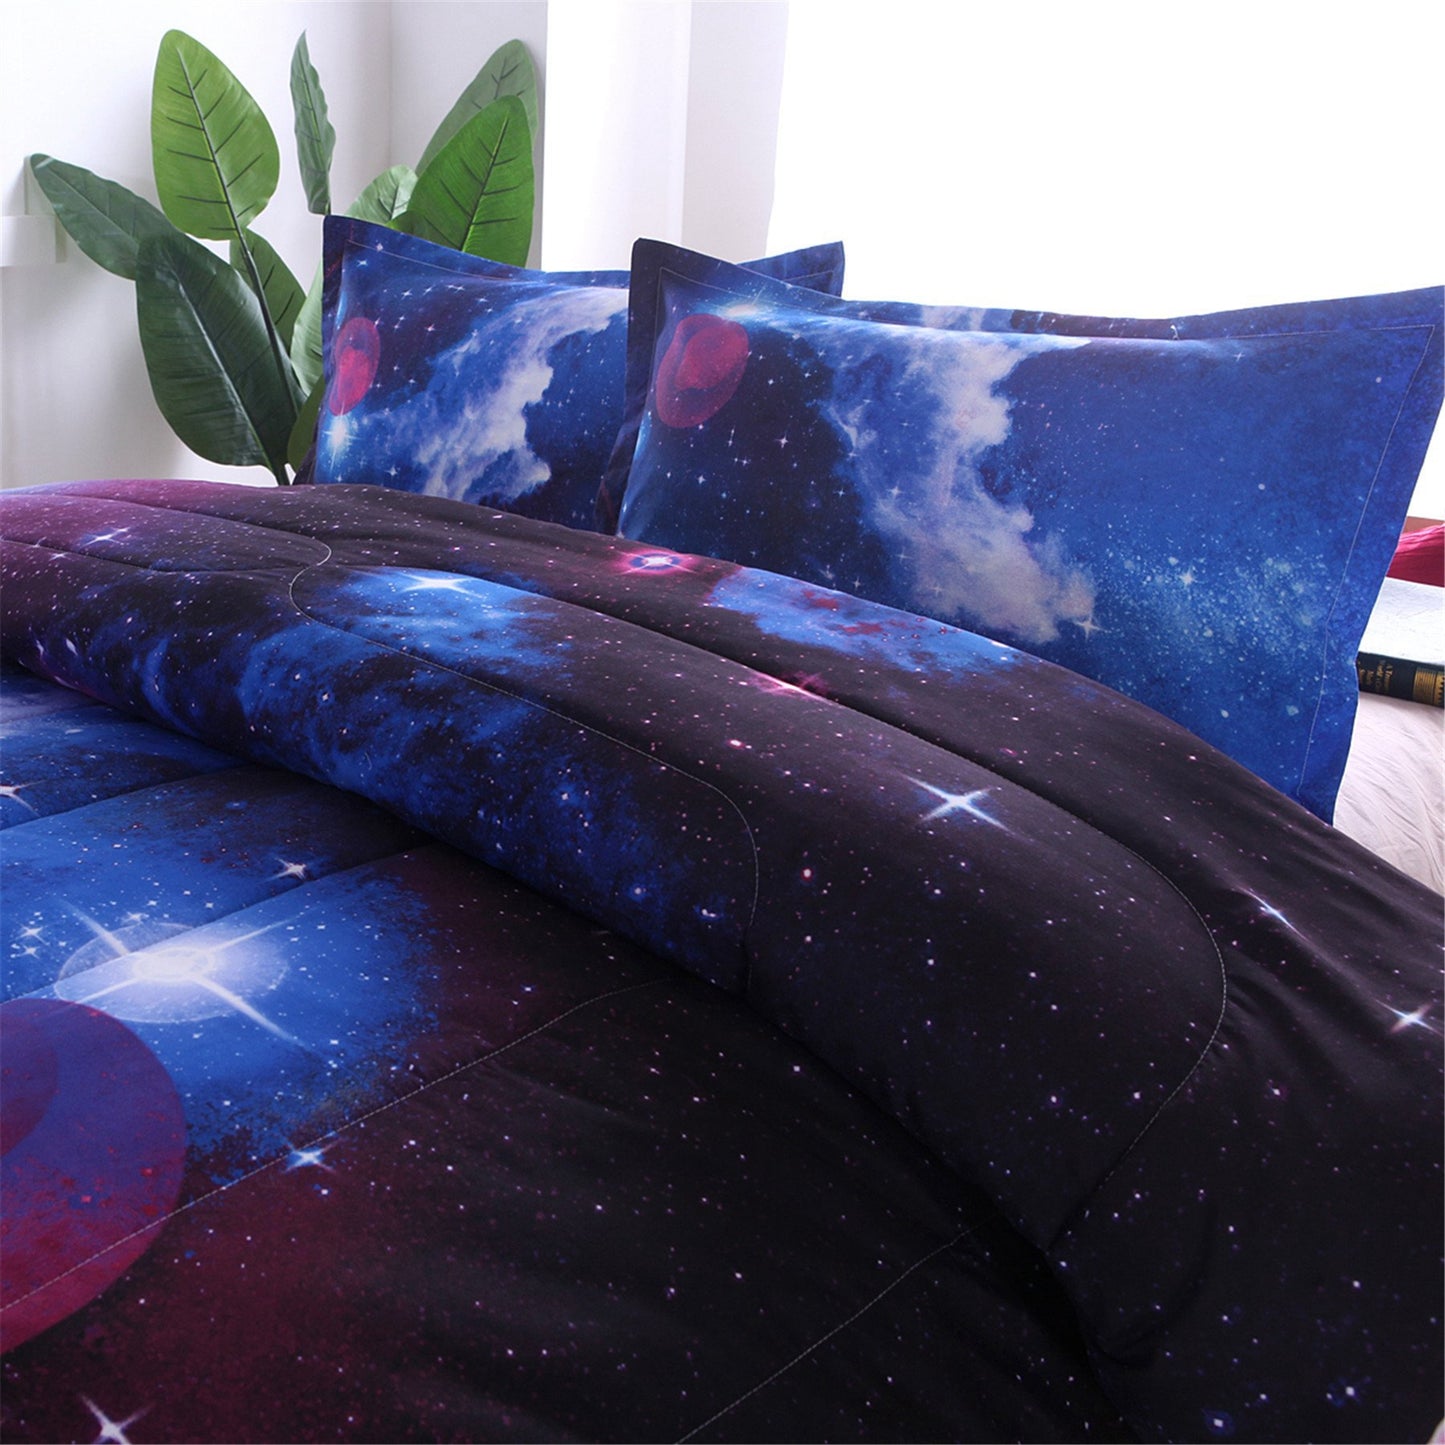 WONGS BEDDING A Nice Night Galaxy comforter set 3 Pieces Bedding Comforter with 2 Pillow Cases - Wongs bedding